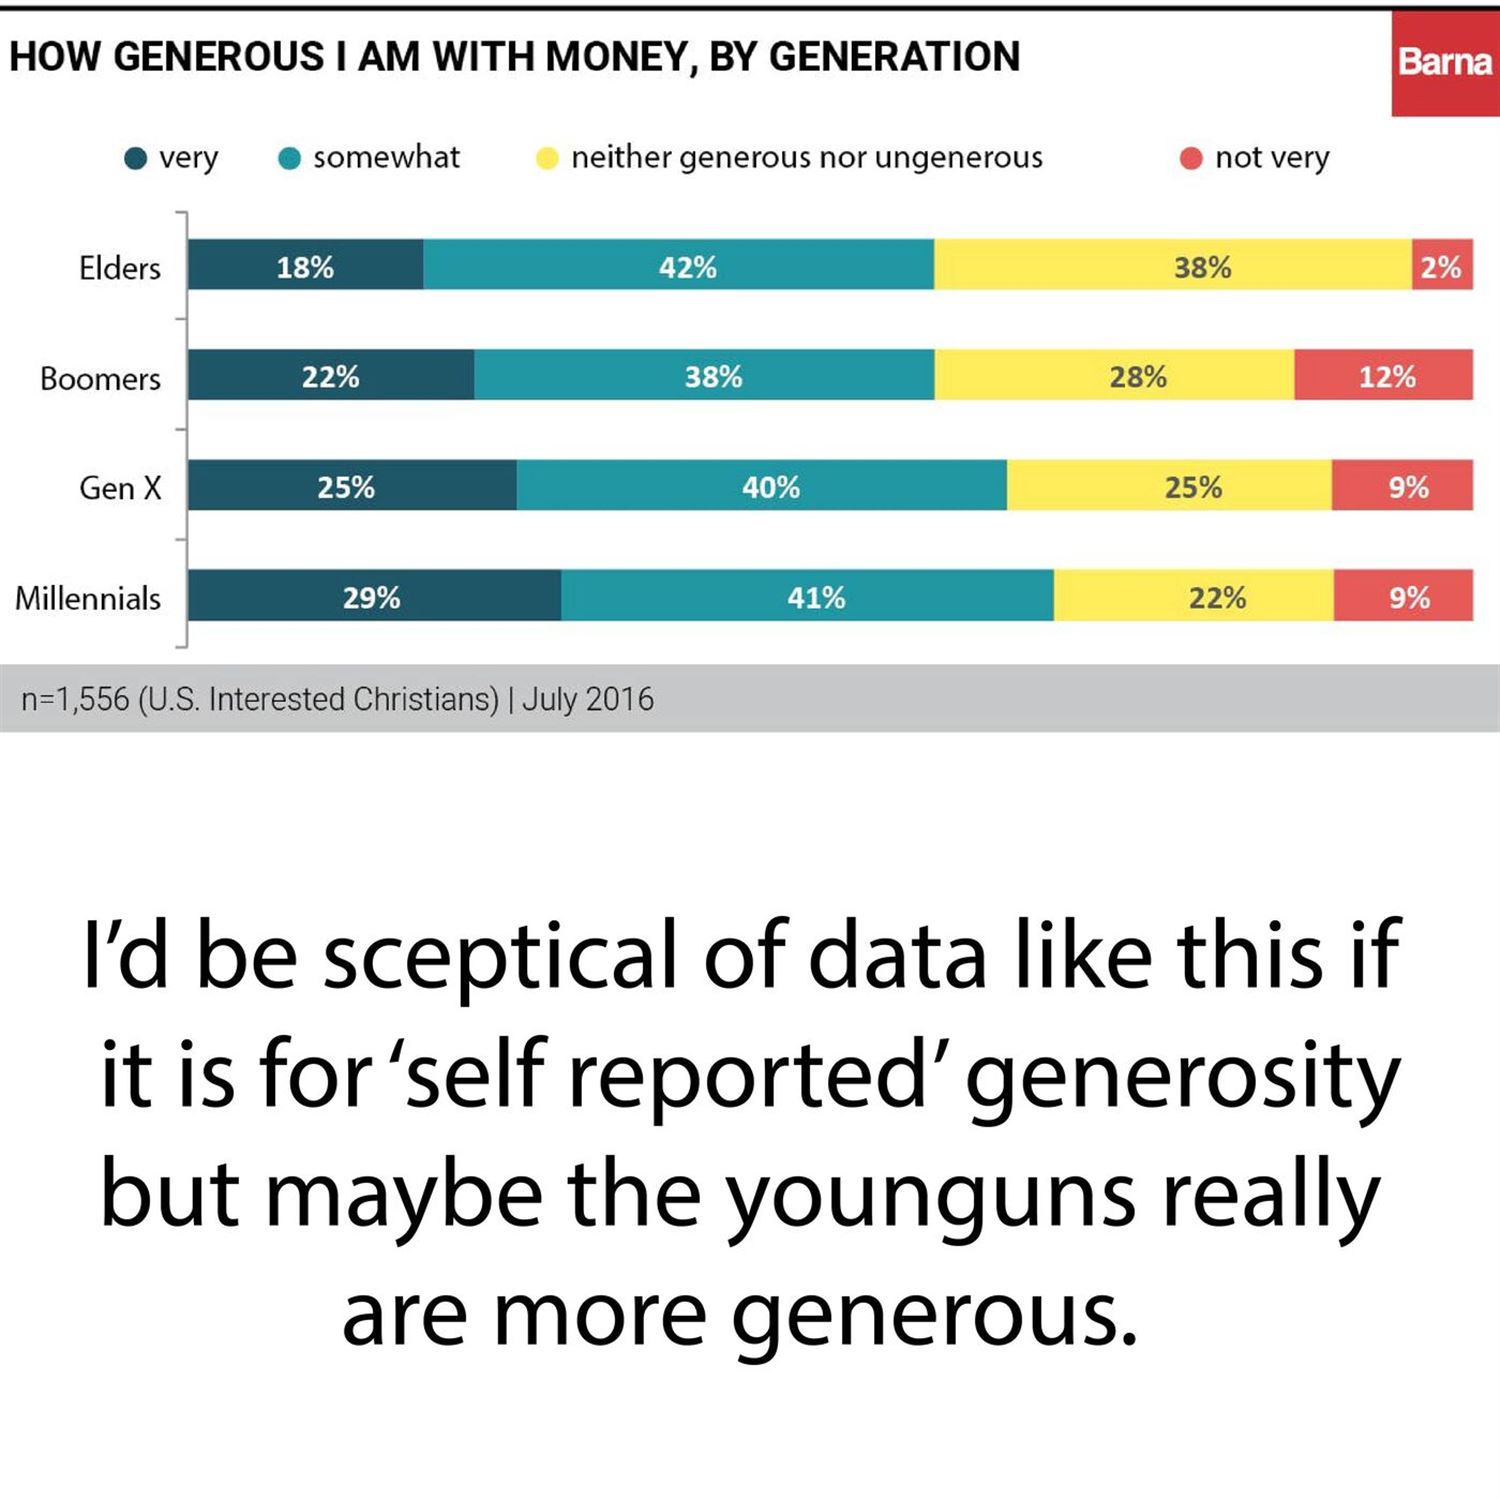 Generosity across generations